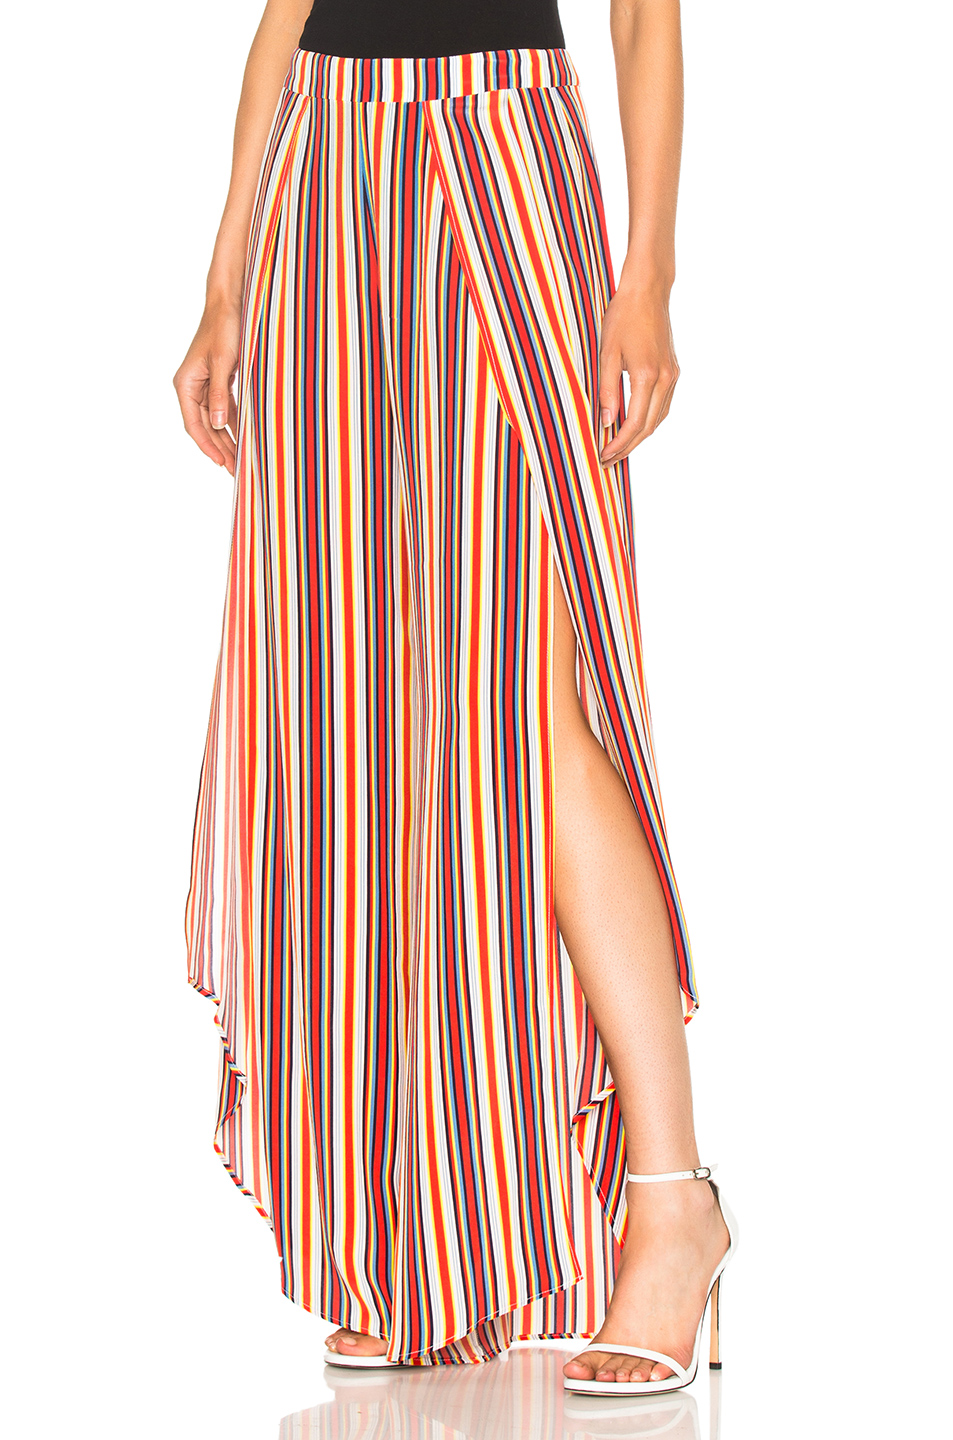 Alexis Austin Pant In Multicolor Stripes | ModeSens